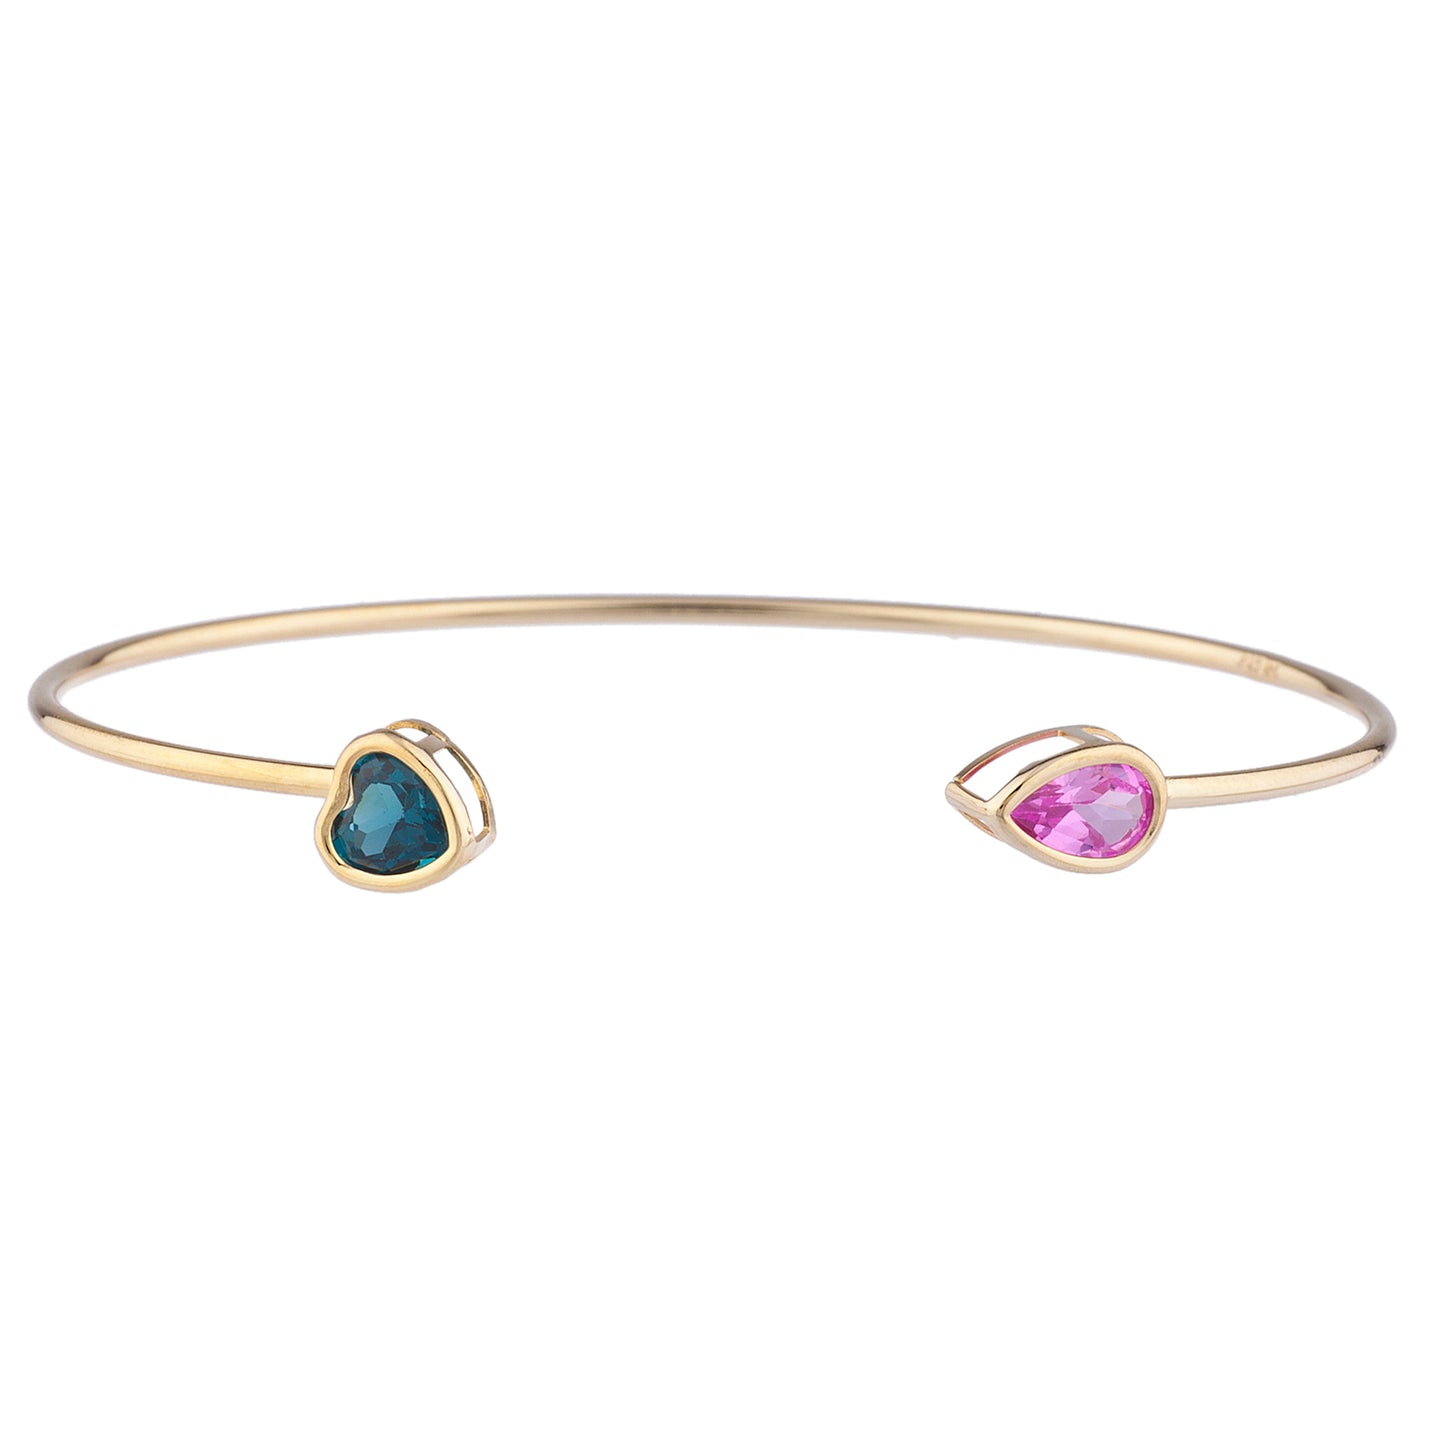 14Kt Gold London Blue Topaz Heart & Pink Sapphire Pear Bezel Bangle Bracelet